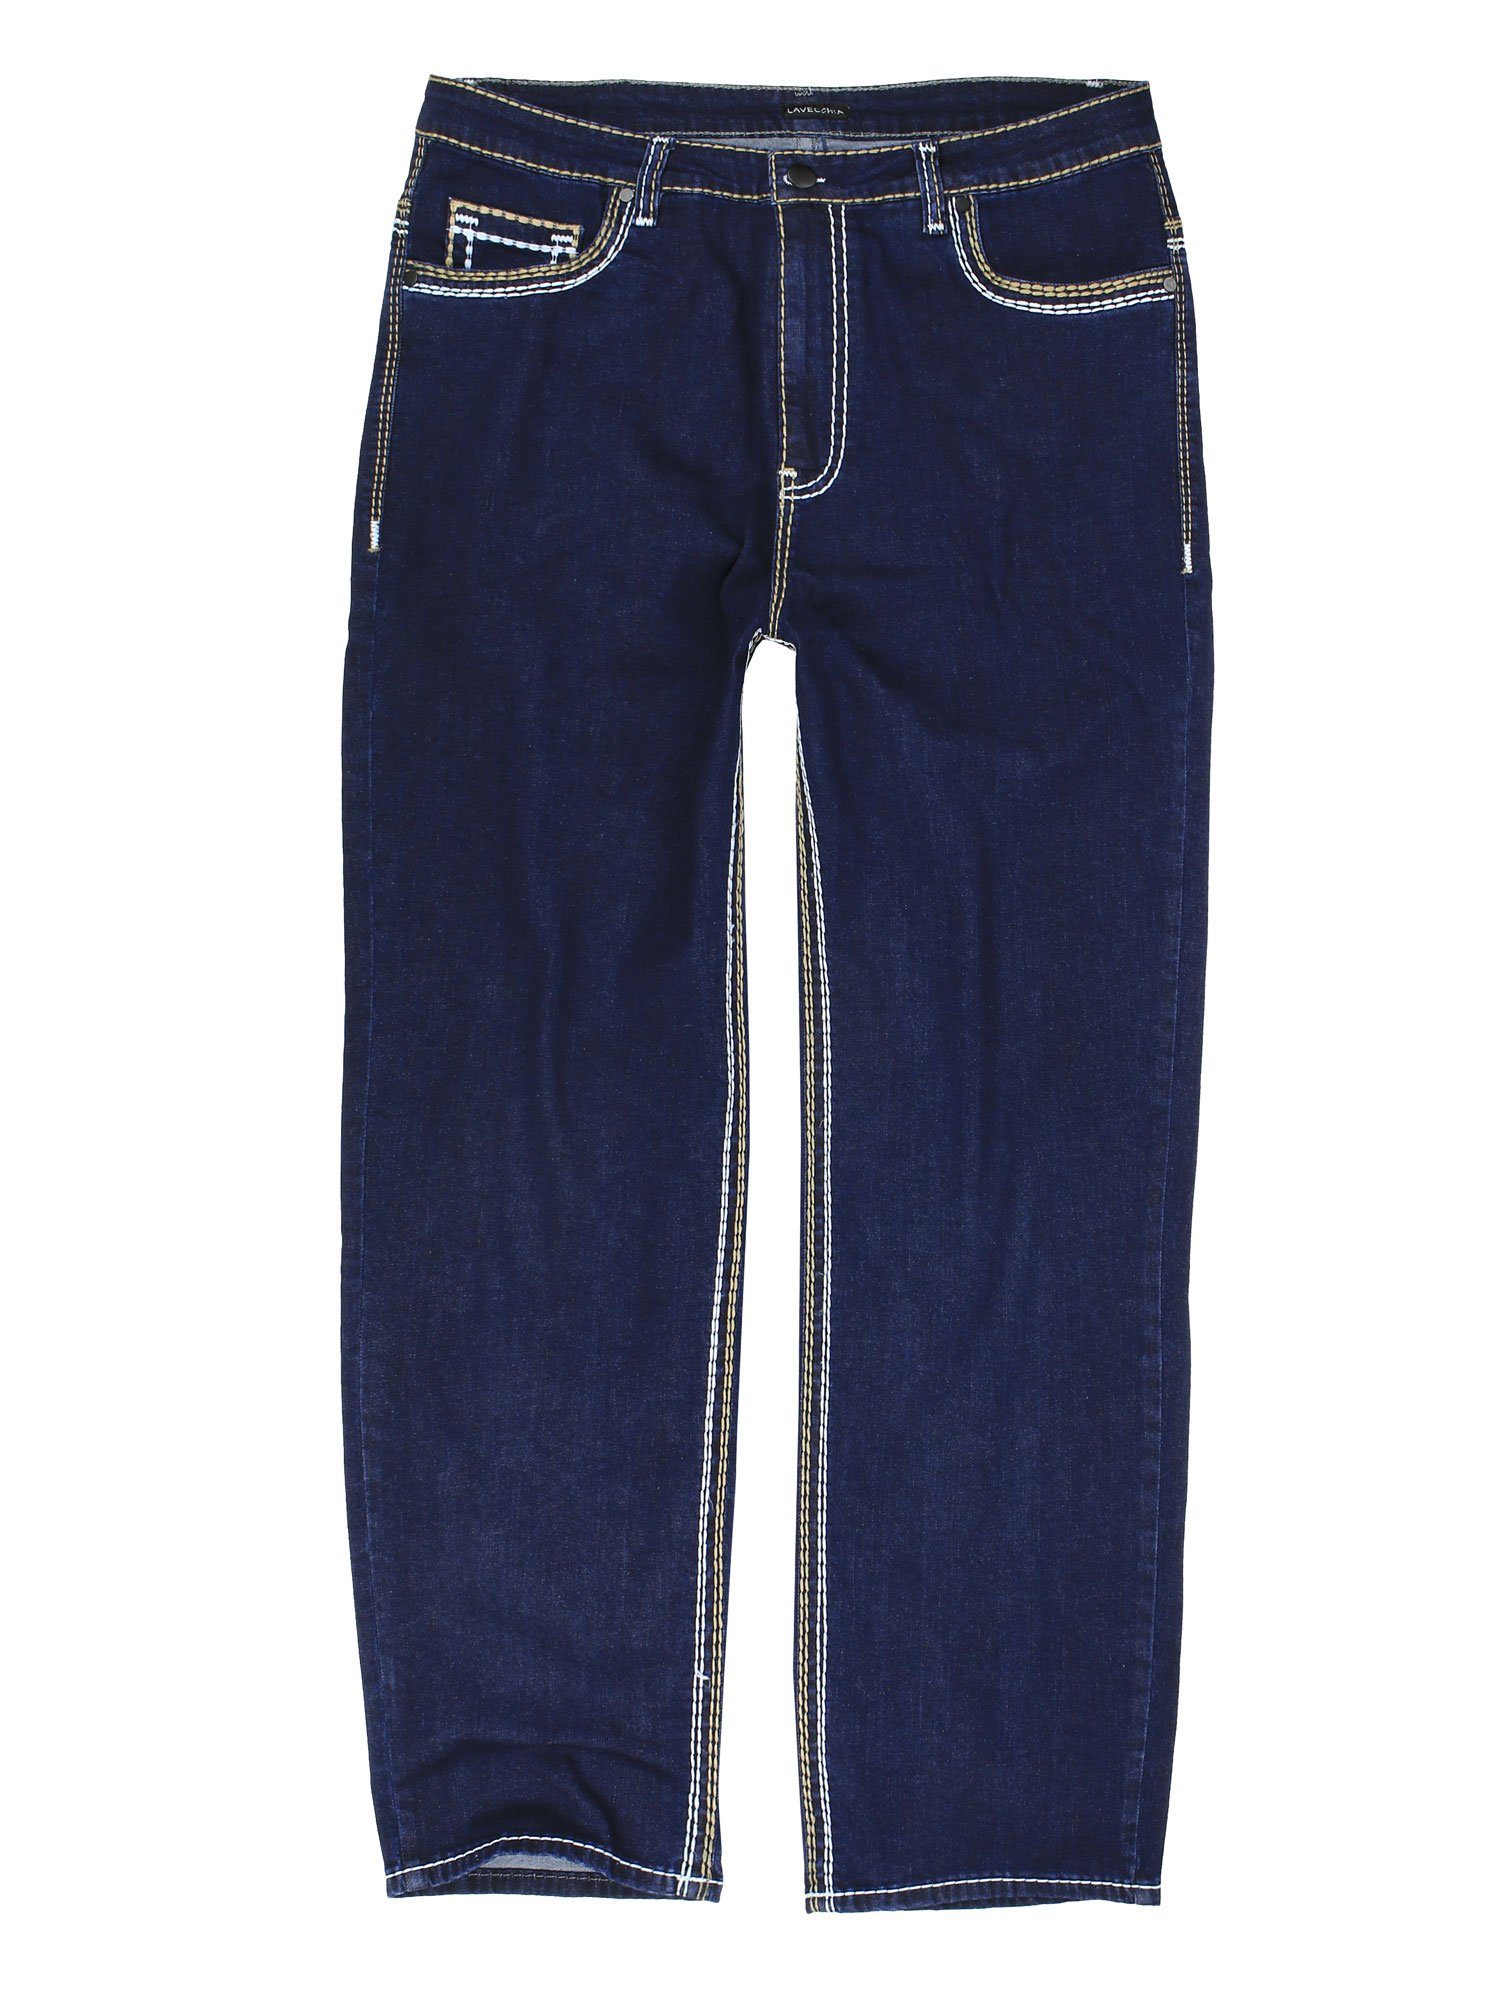 Lavecchia Comfort-fit-Jeans Übergrößen Herren Jeanshose LV-503 Stretch mit Elasthan & dicker Naht dunkelblau